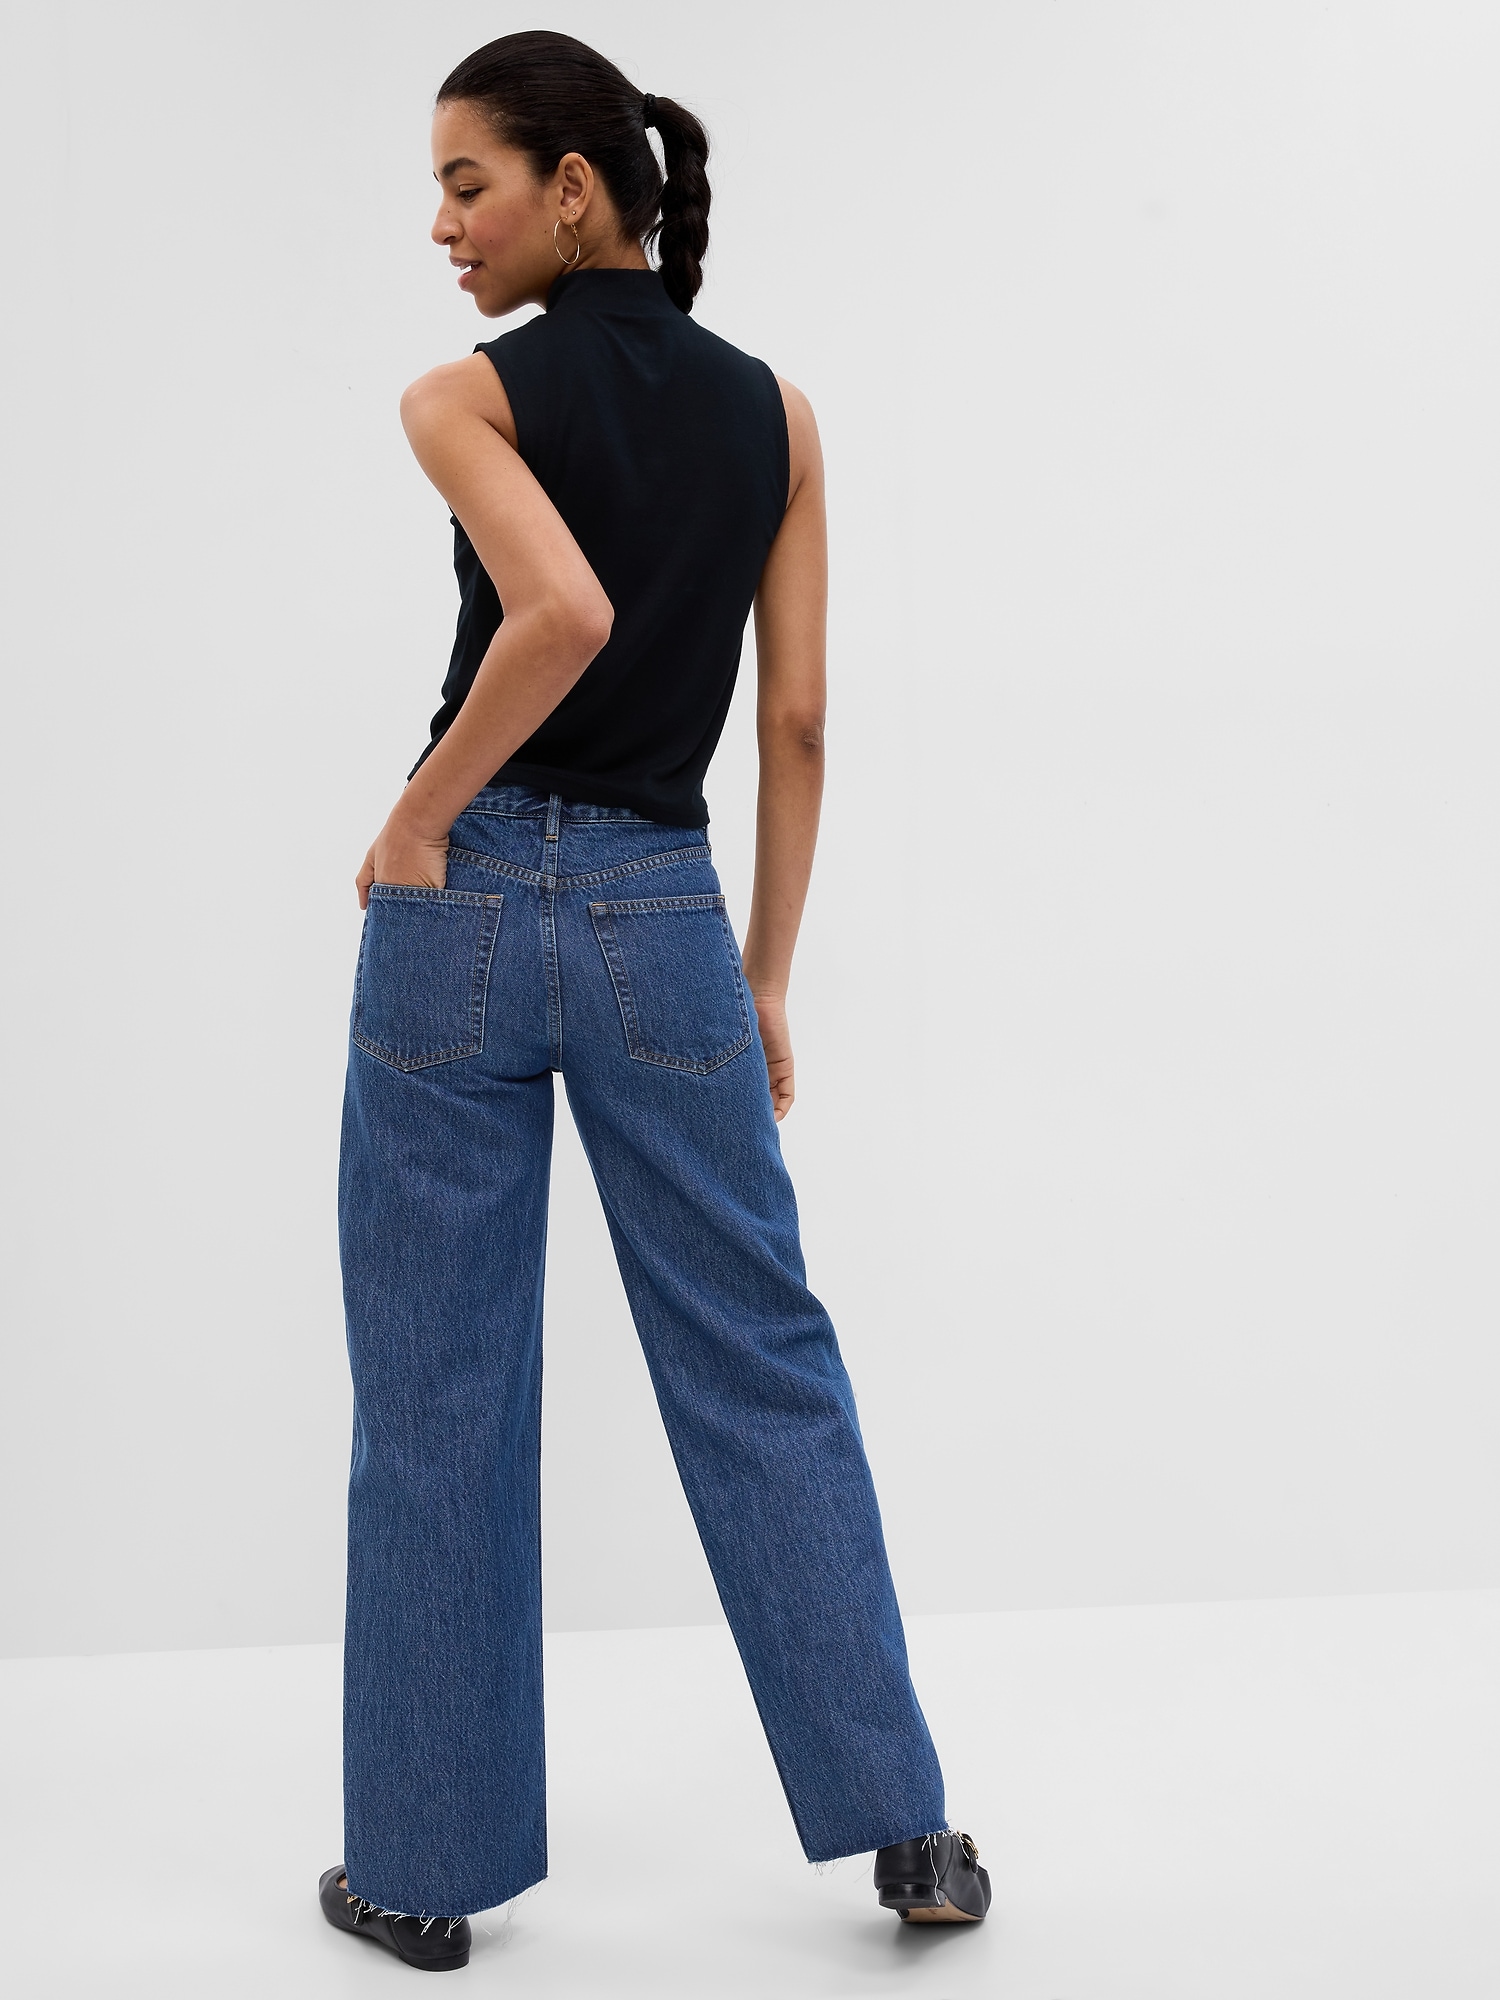 BetterMade Denim Low Rise Stride Jeans | Gap